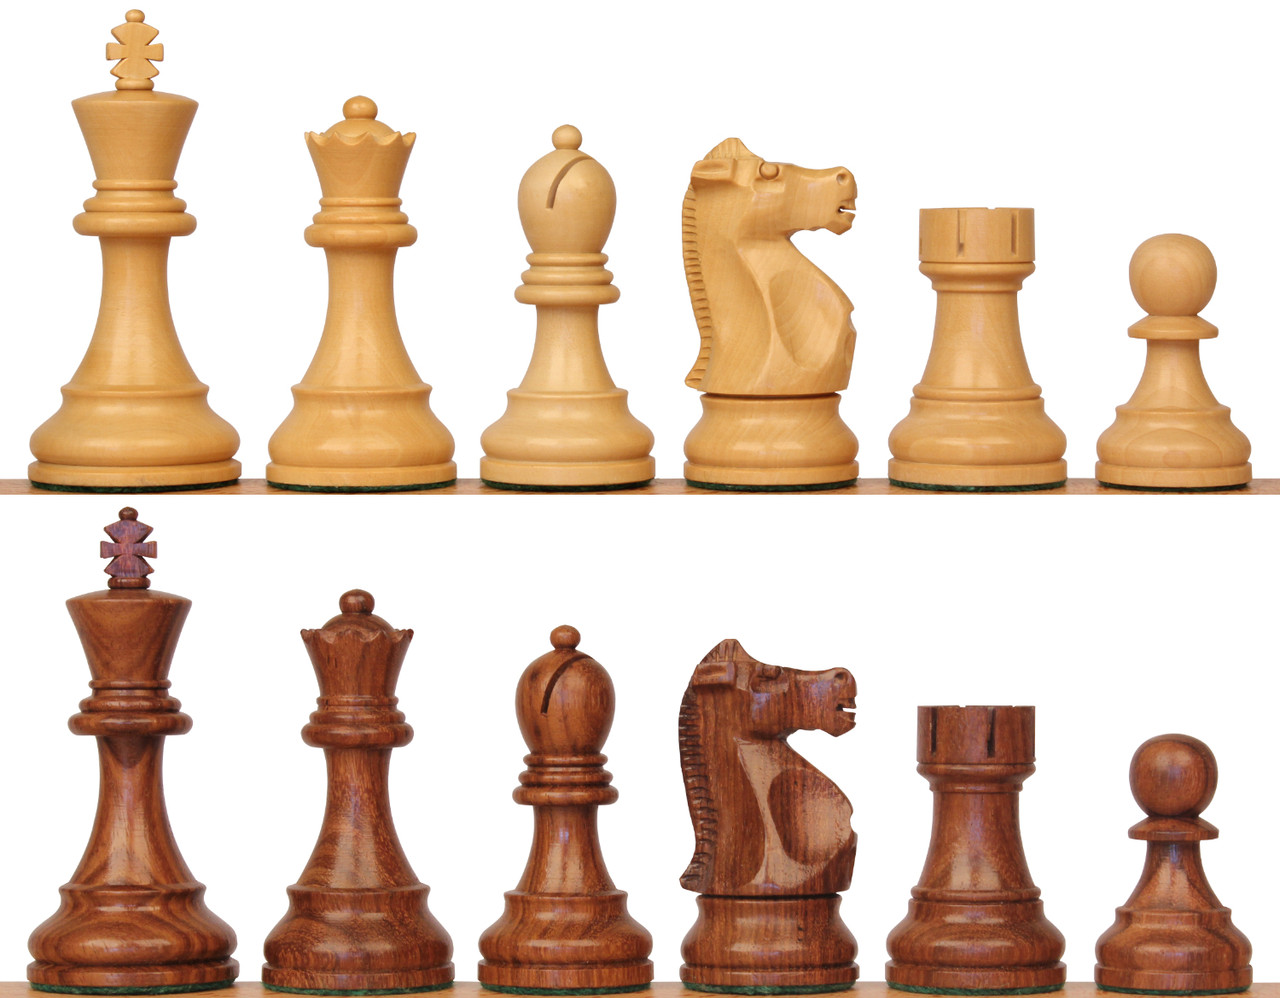 Boris Spassky Rosewood Chess Set